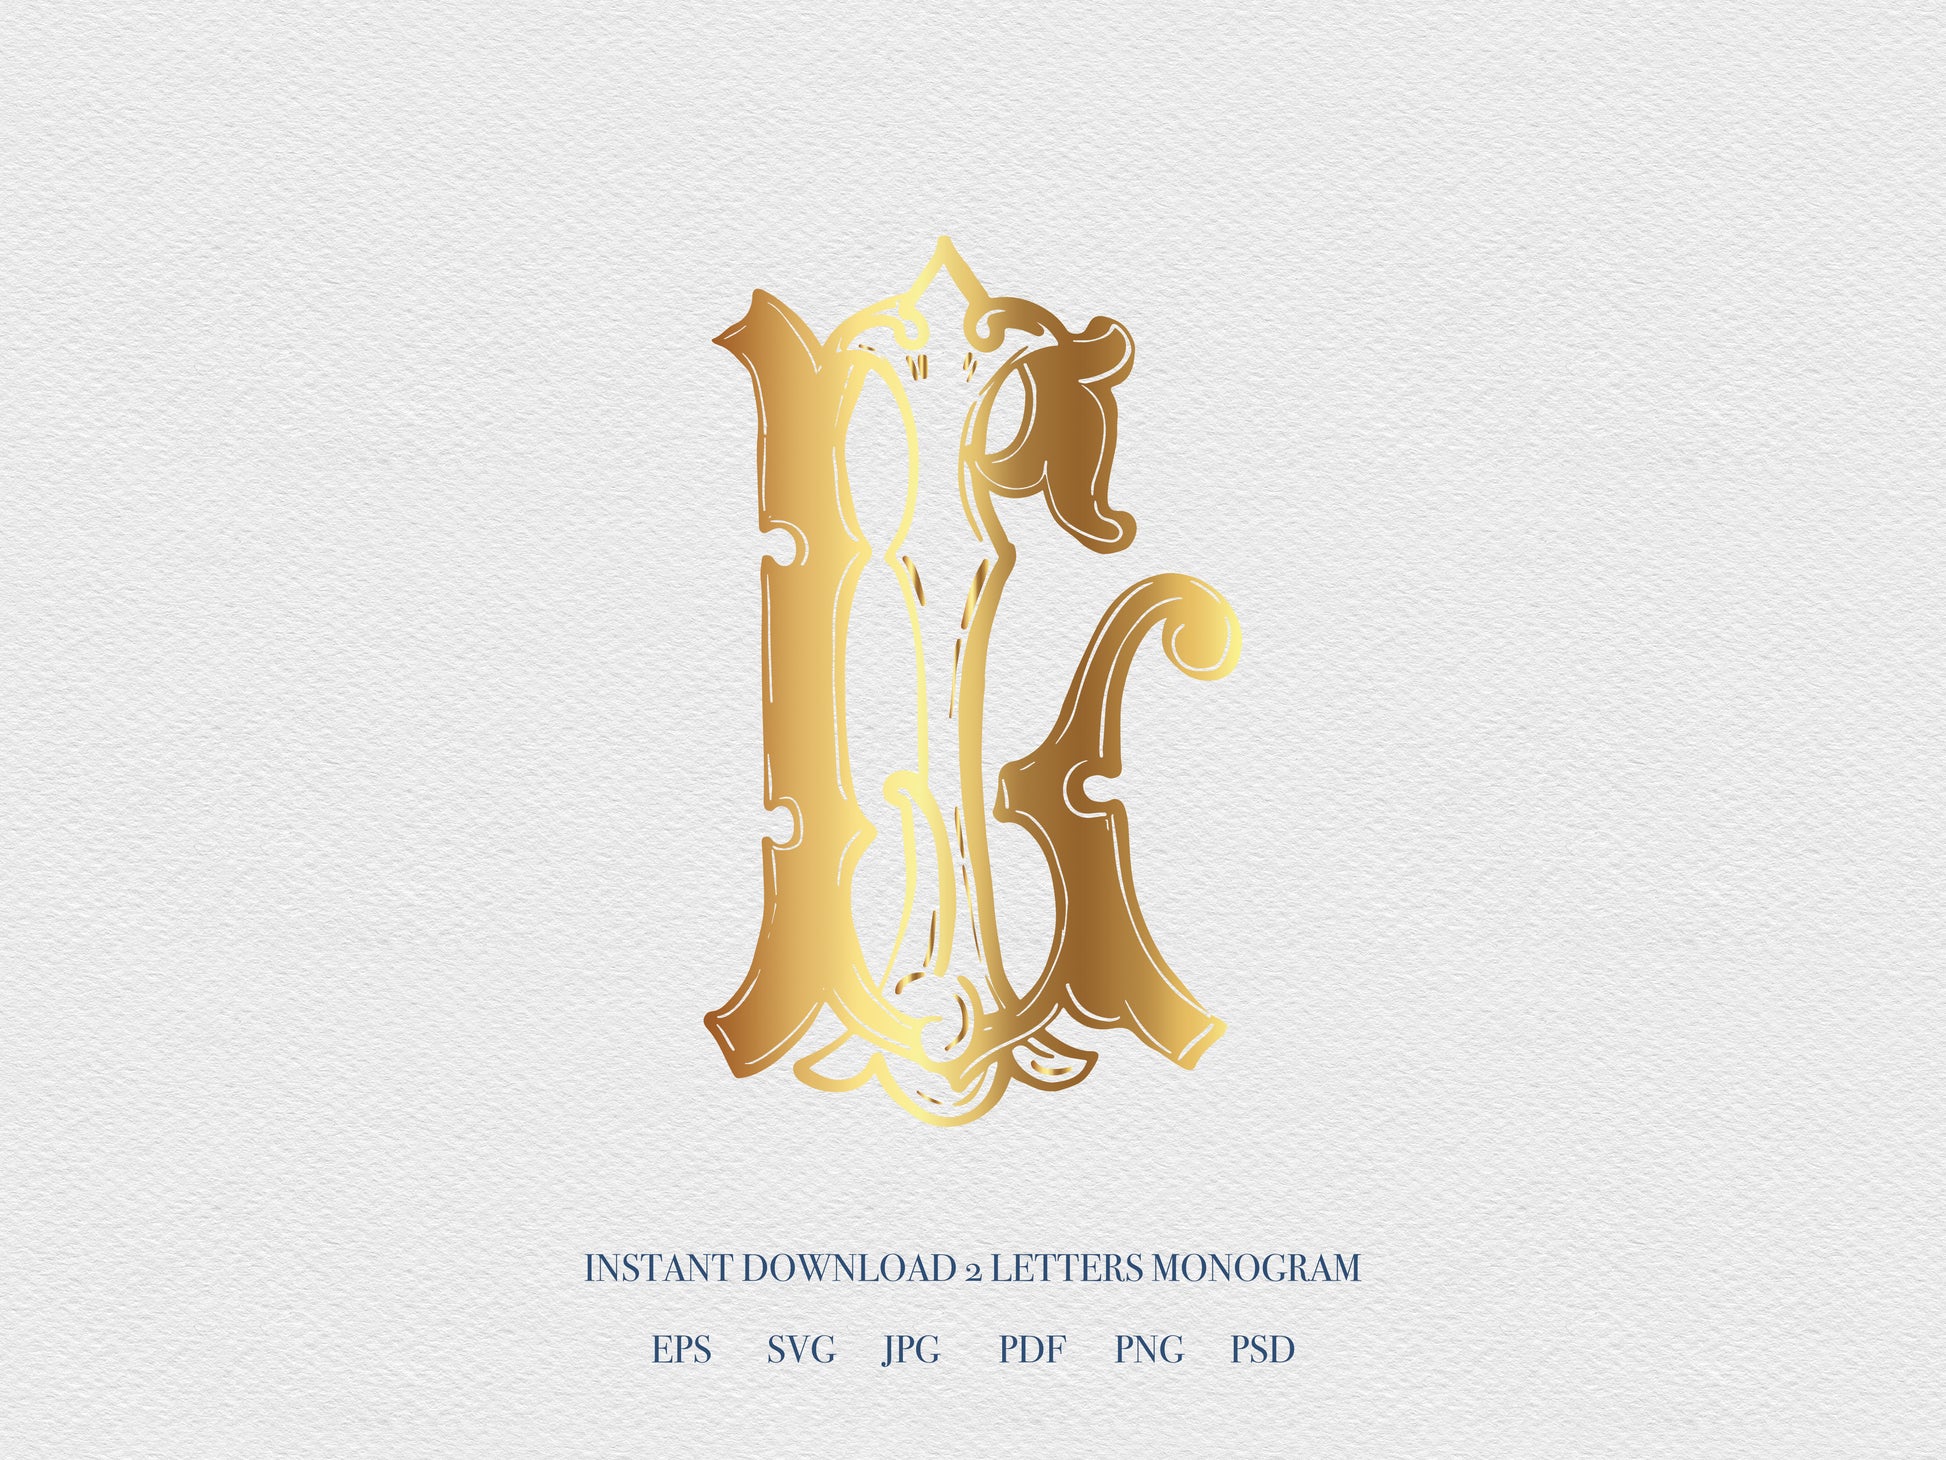 2 Letter Monogram with Letters GI IG | Digital Download - Wedding Monogram SVG, Personal Logo, Wedding Logo for Wedding Invitations The Wedding Crest Lab